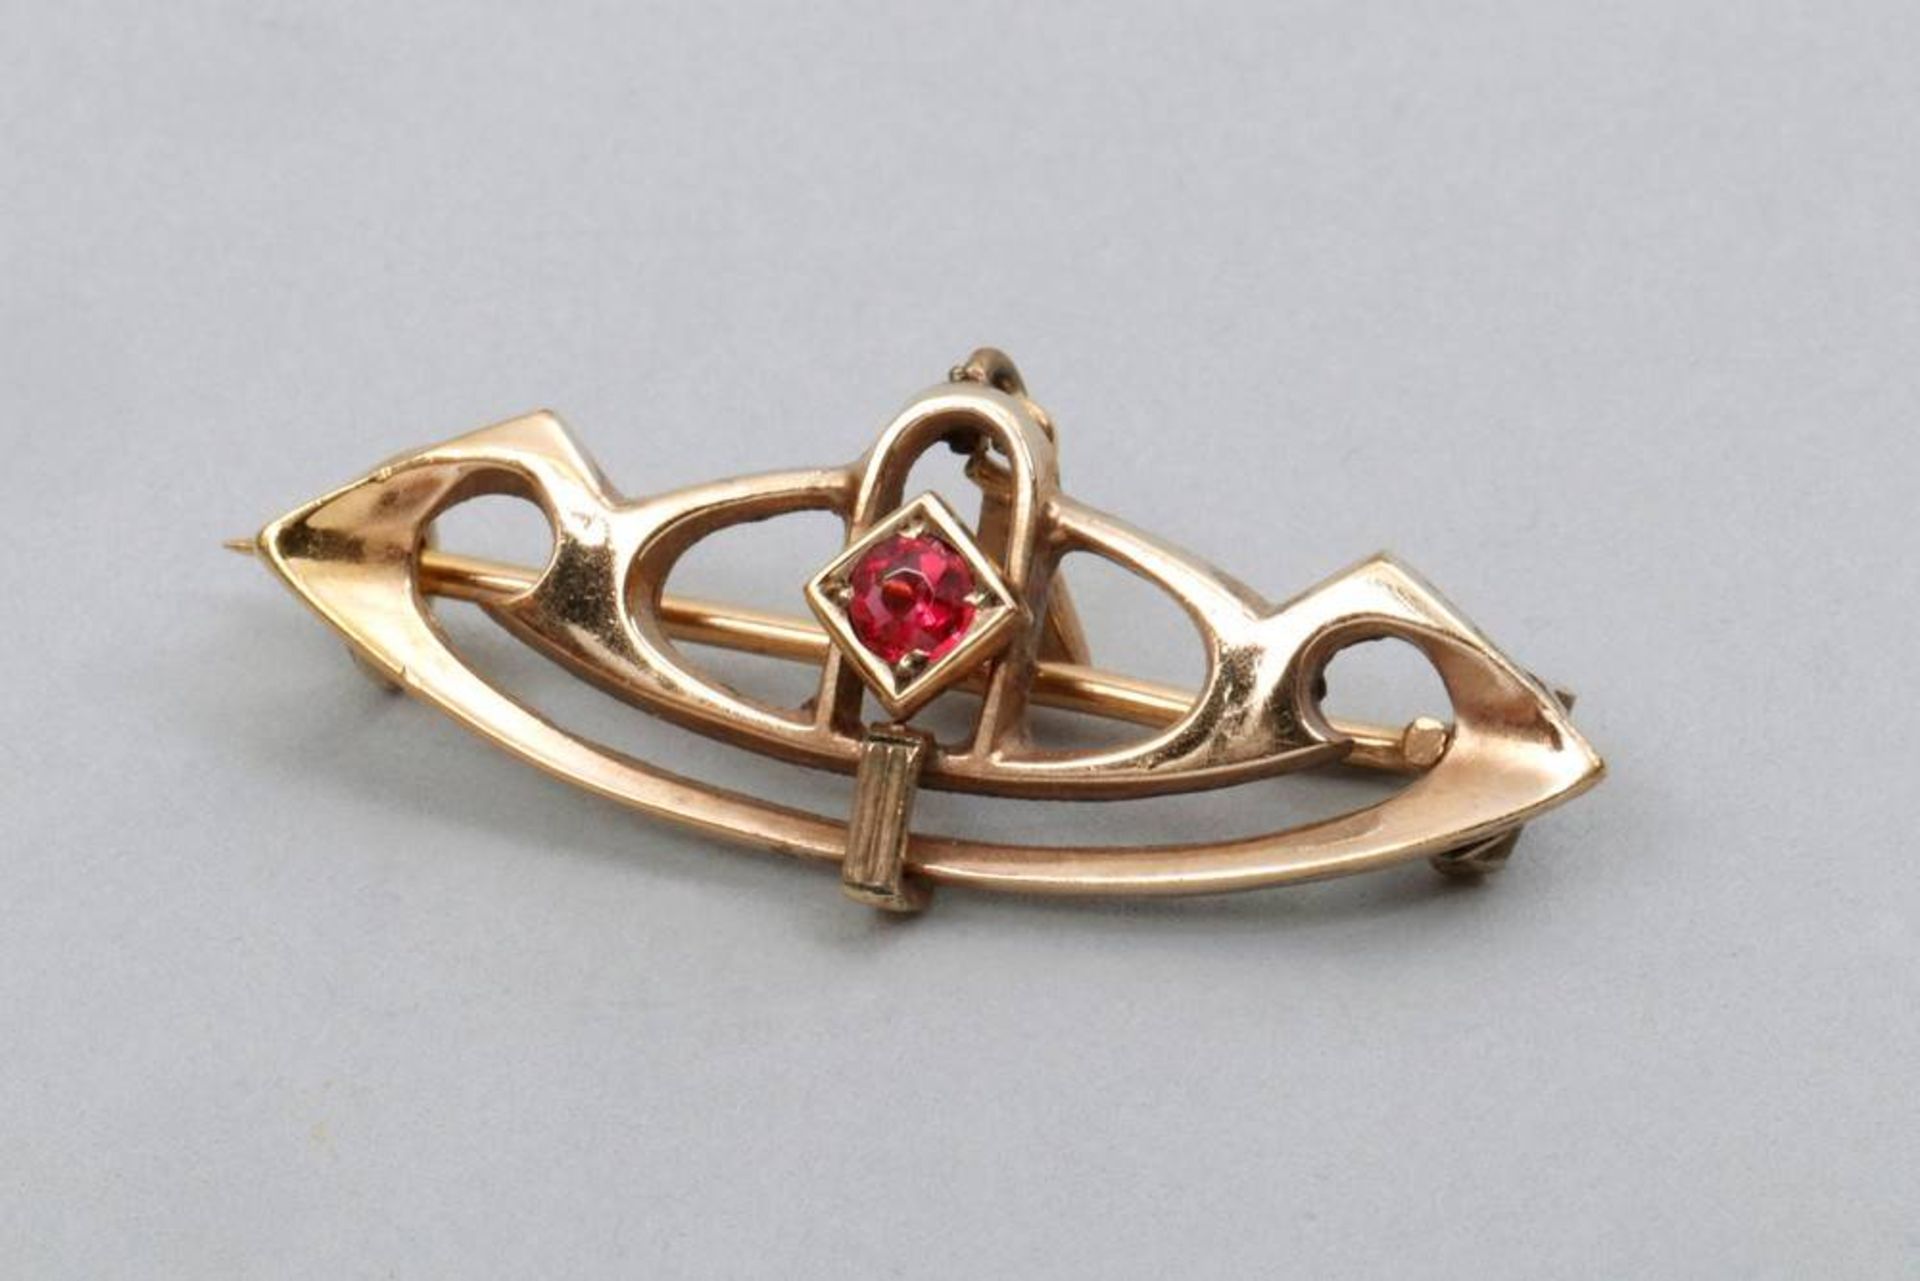 Art Nouveau brooch8kt gold, ca. 1900, red, semi precious stone, 3,2cm, 1,60g in total Jugendstil-